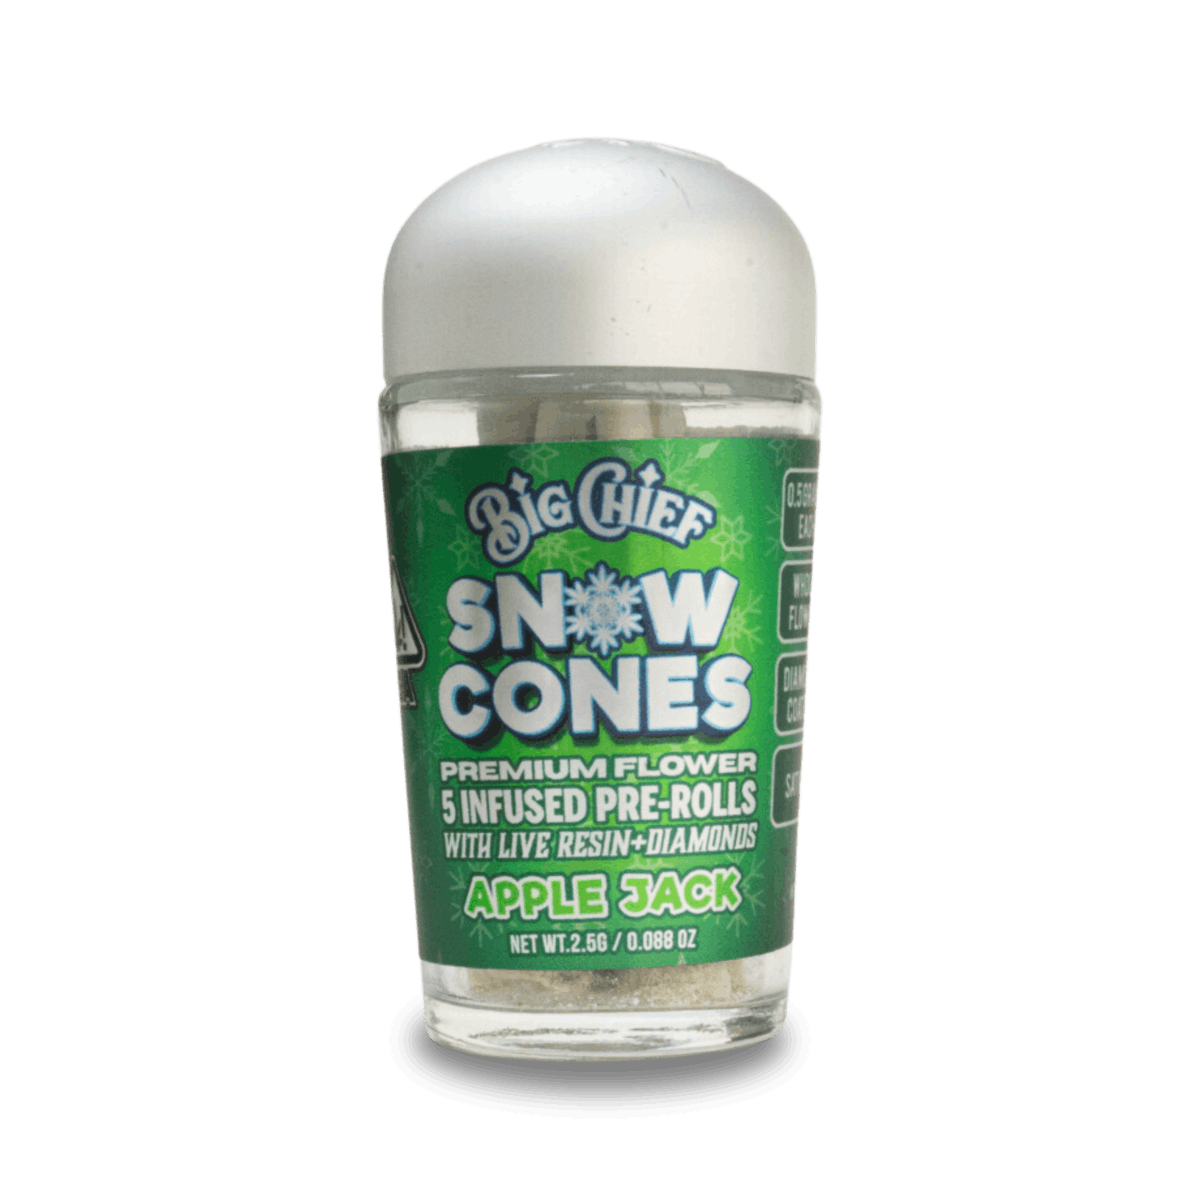 Big Chief Snow Cone Infused Pre-Rolls - Apple Jack